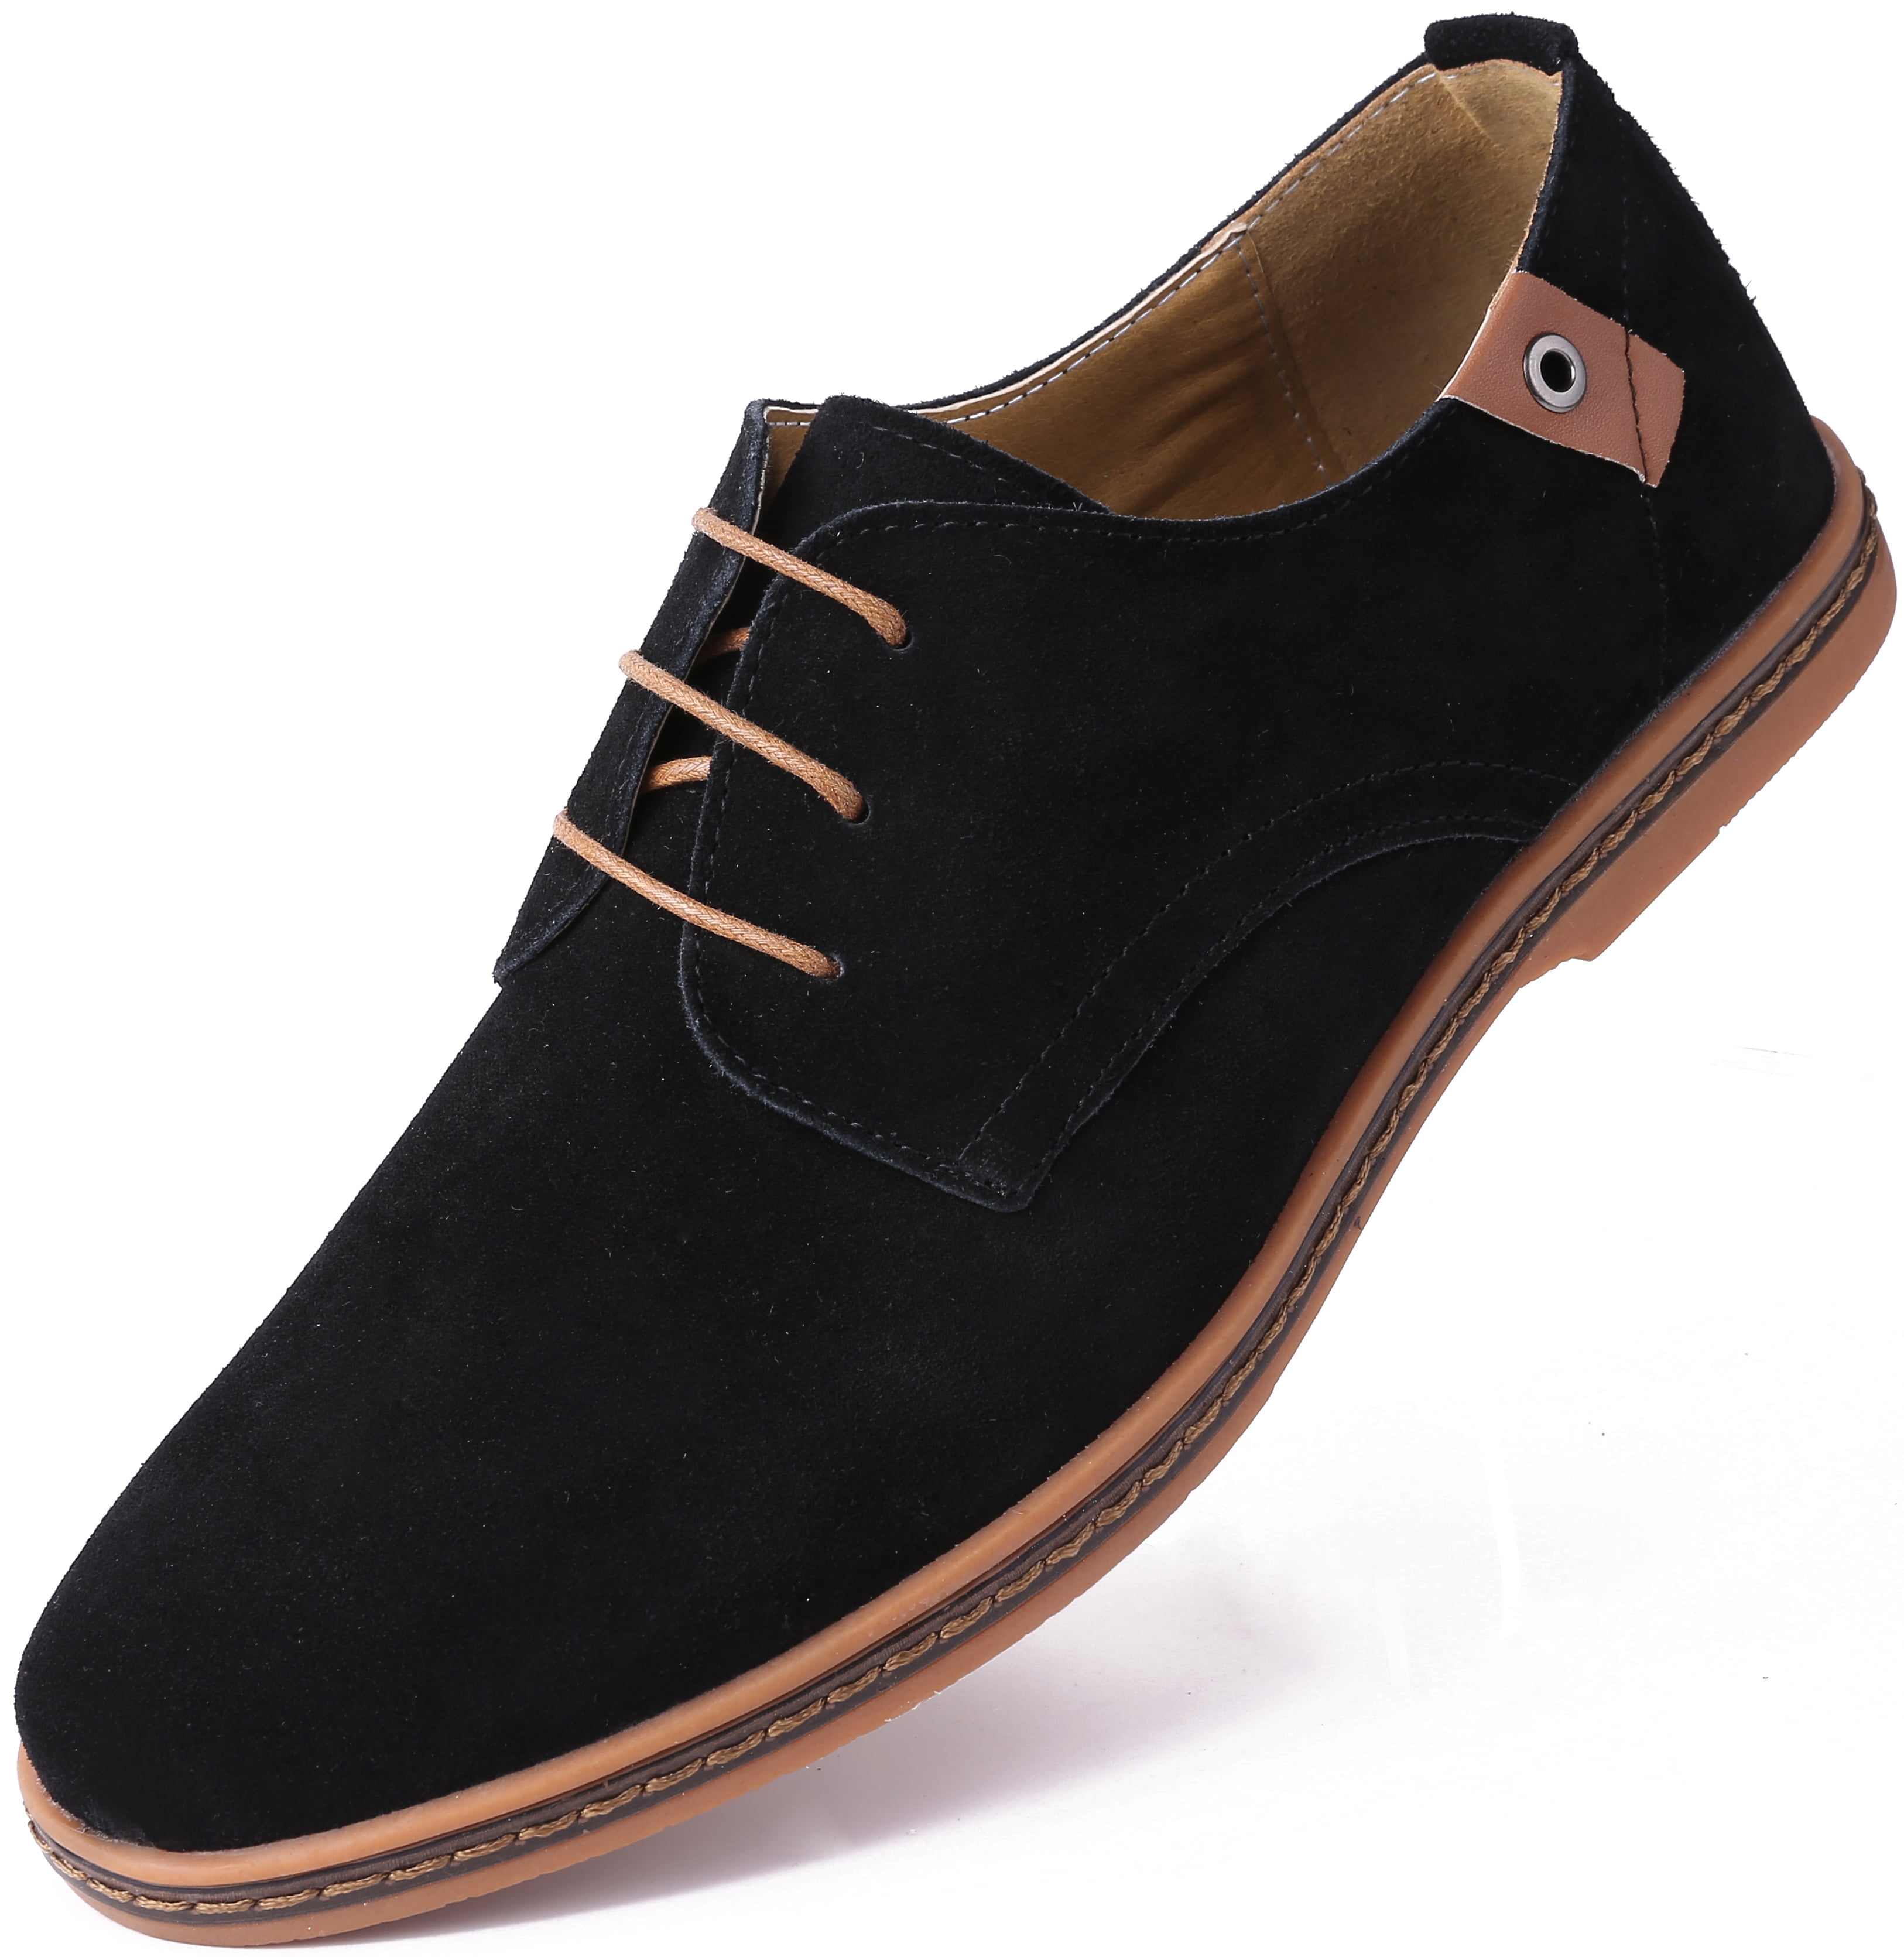 Black Suede Moccasins Shoes Details about   Men Oxford Formal Black Leather Shoes 